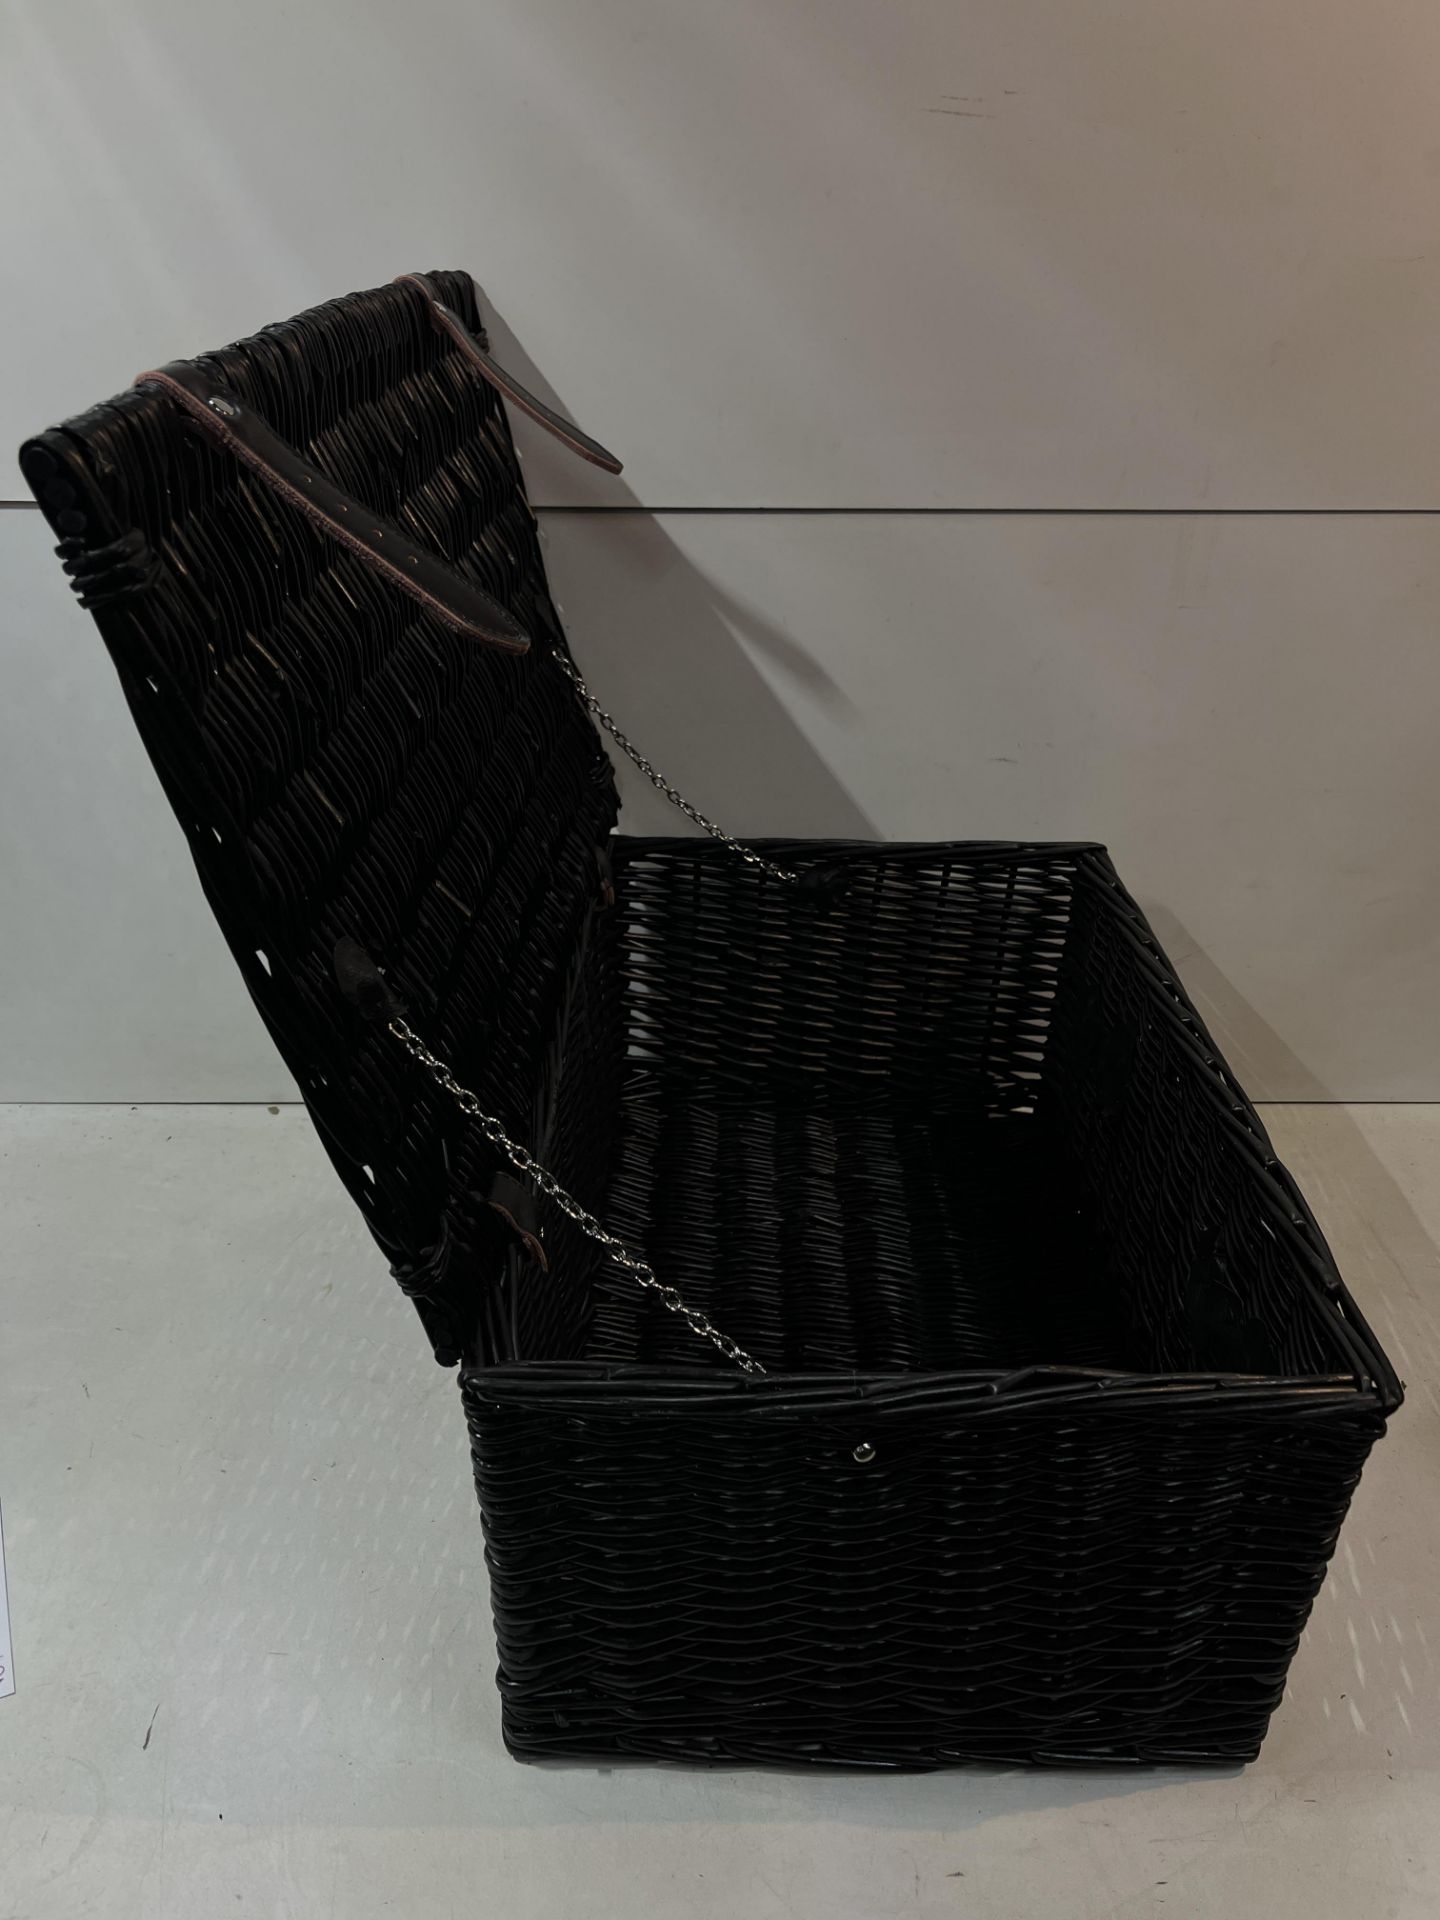 Pallet of Medium Black Gift Wicker Baskets - Image 4 of 5